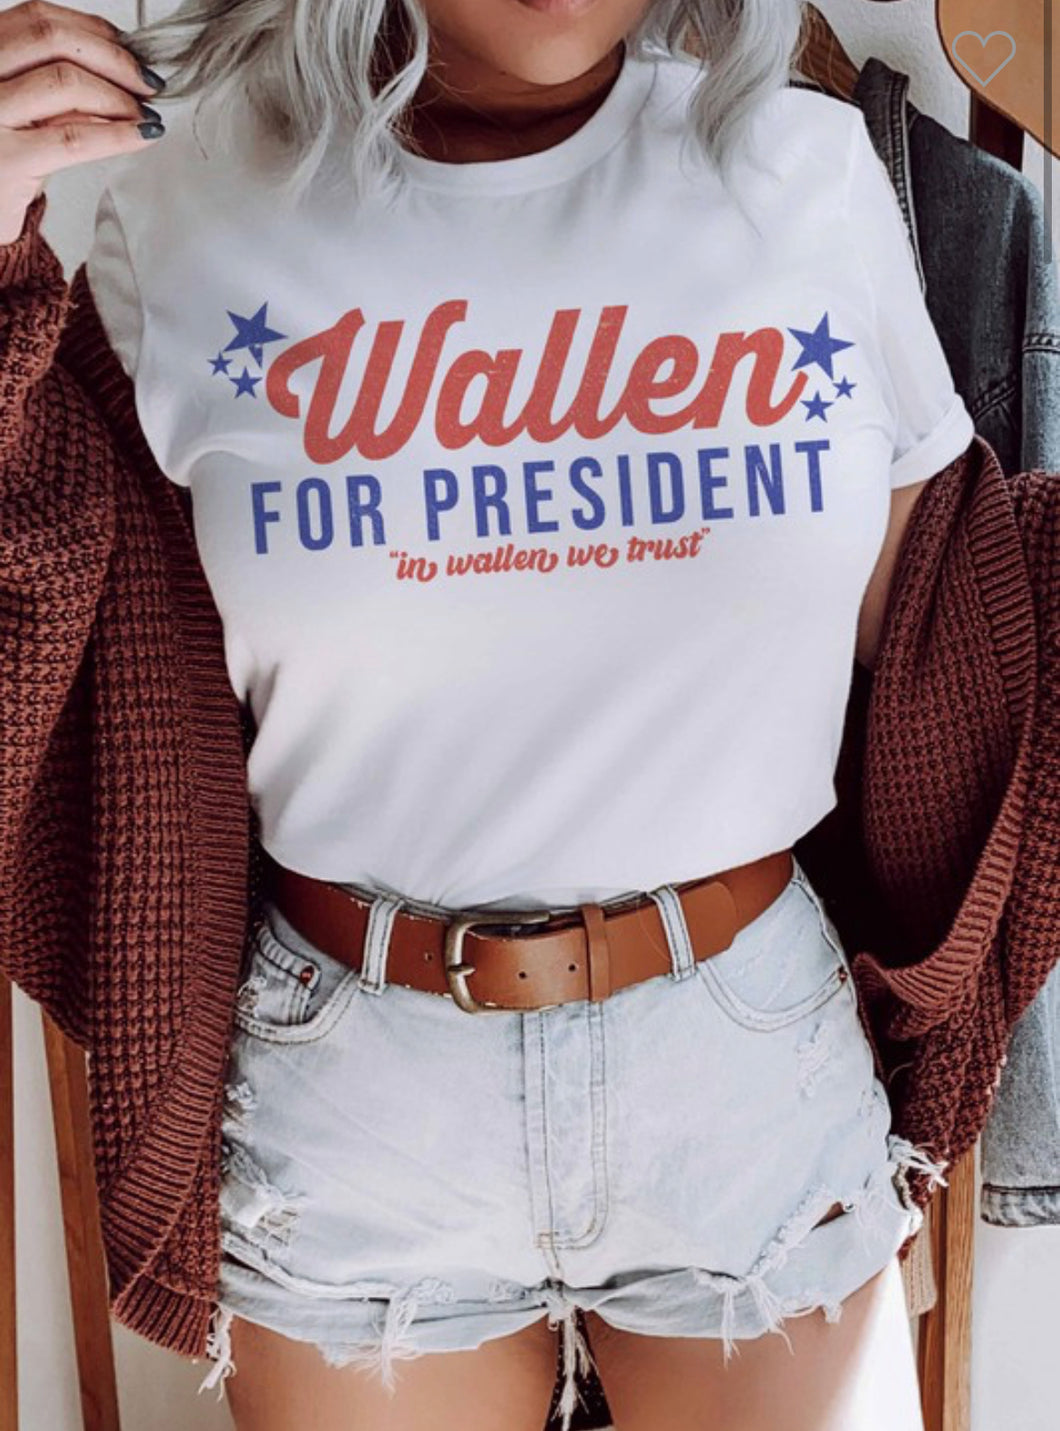 Wallen For President